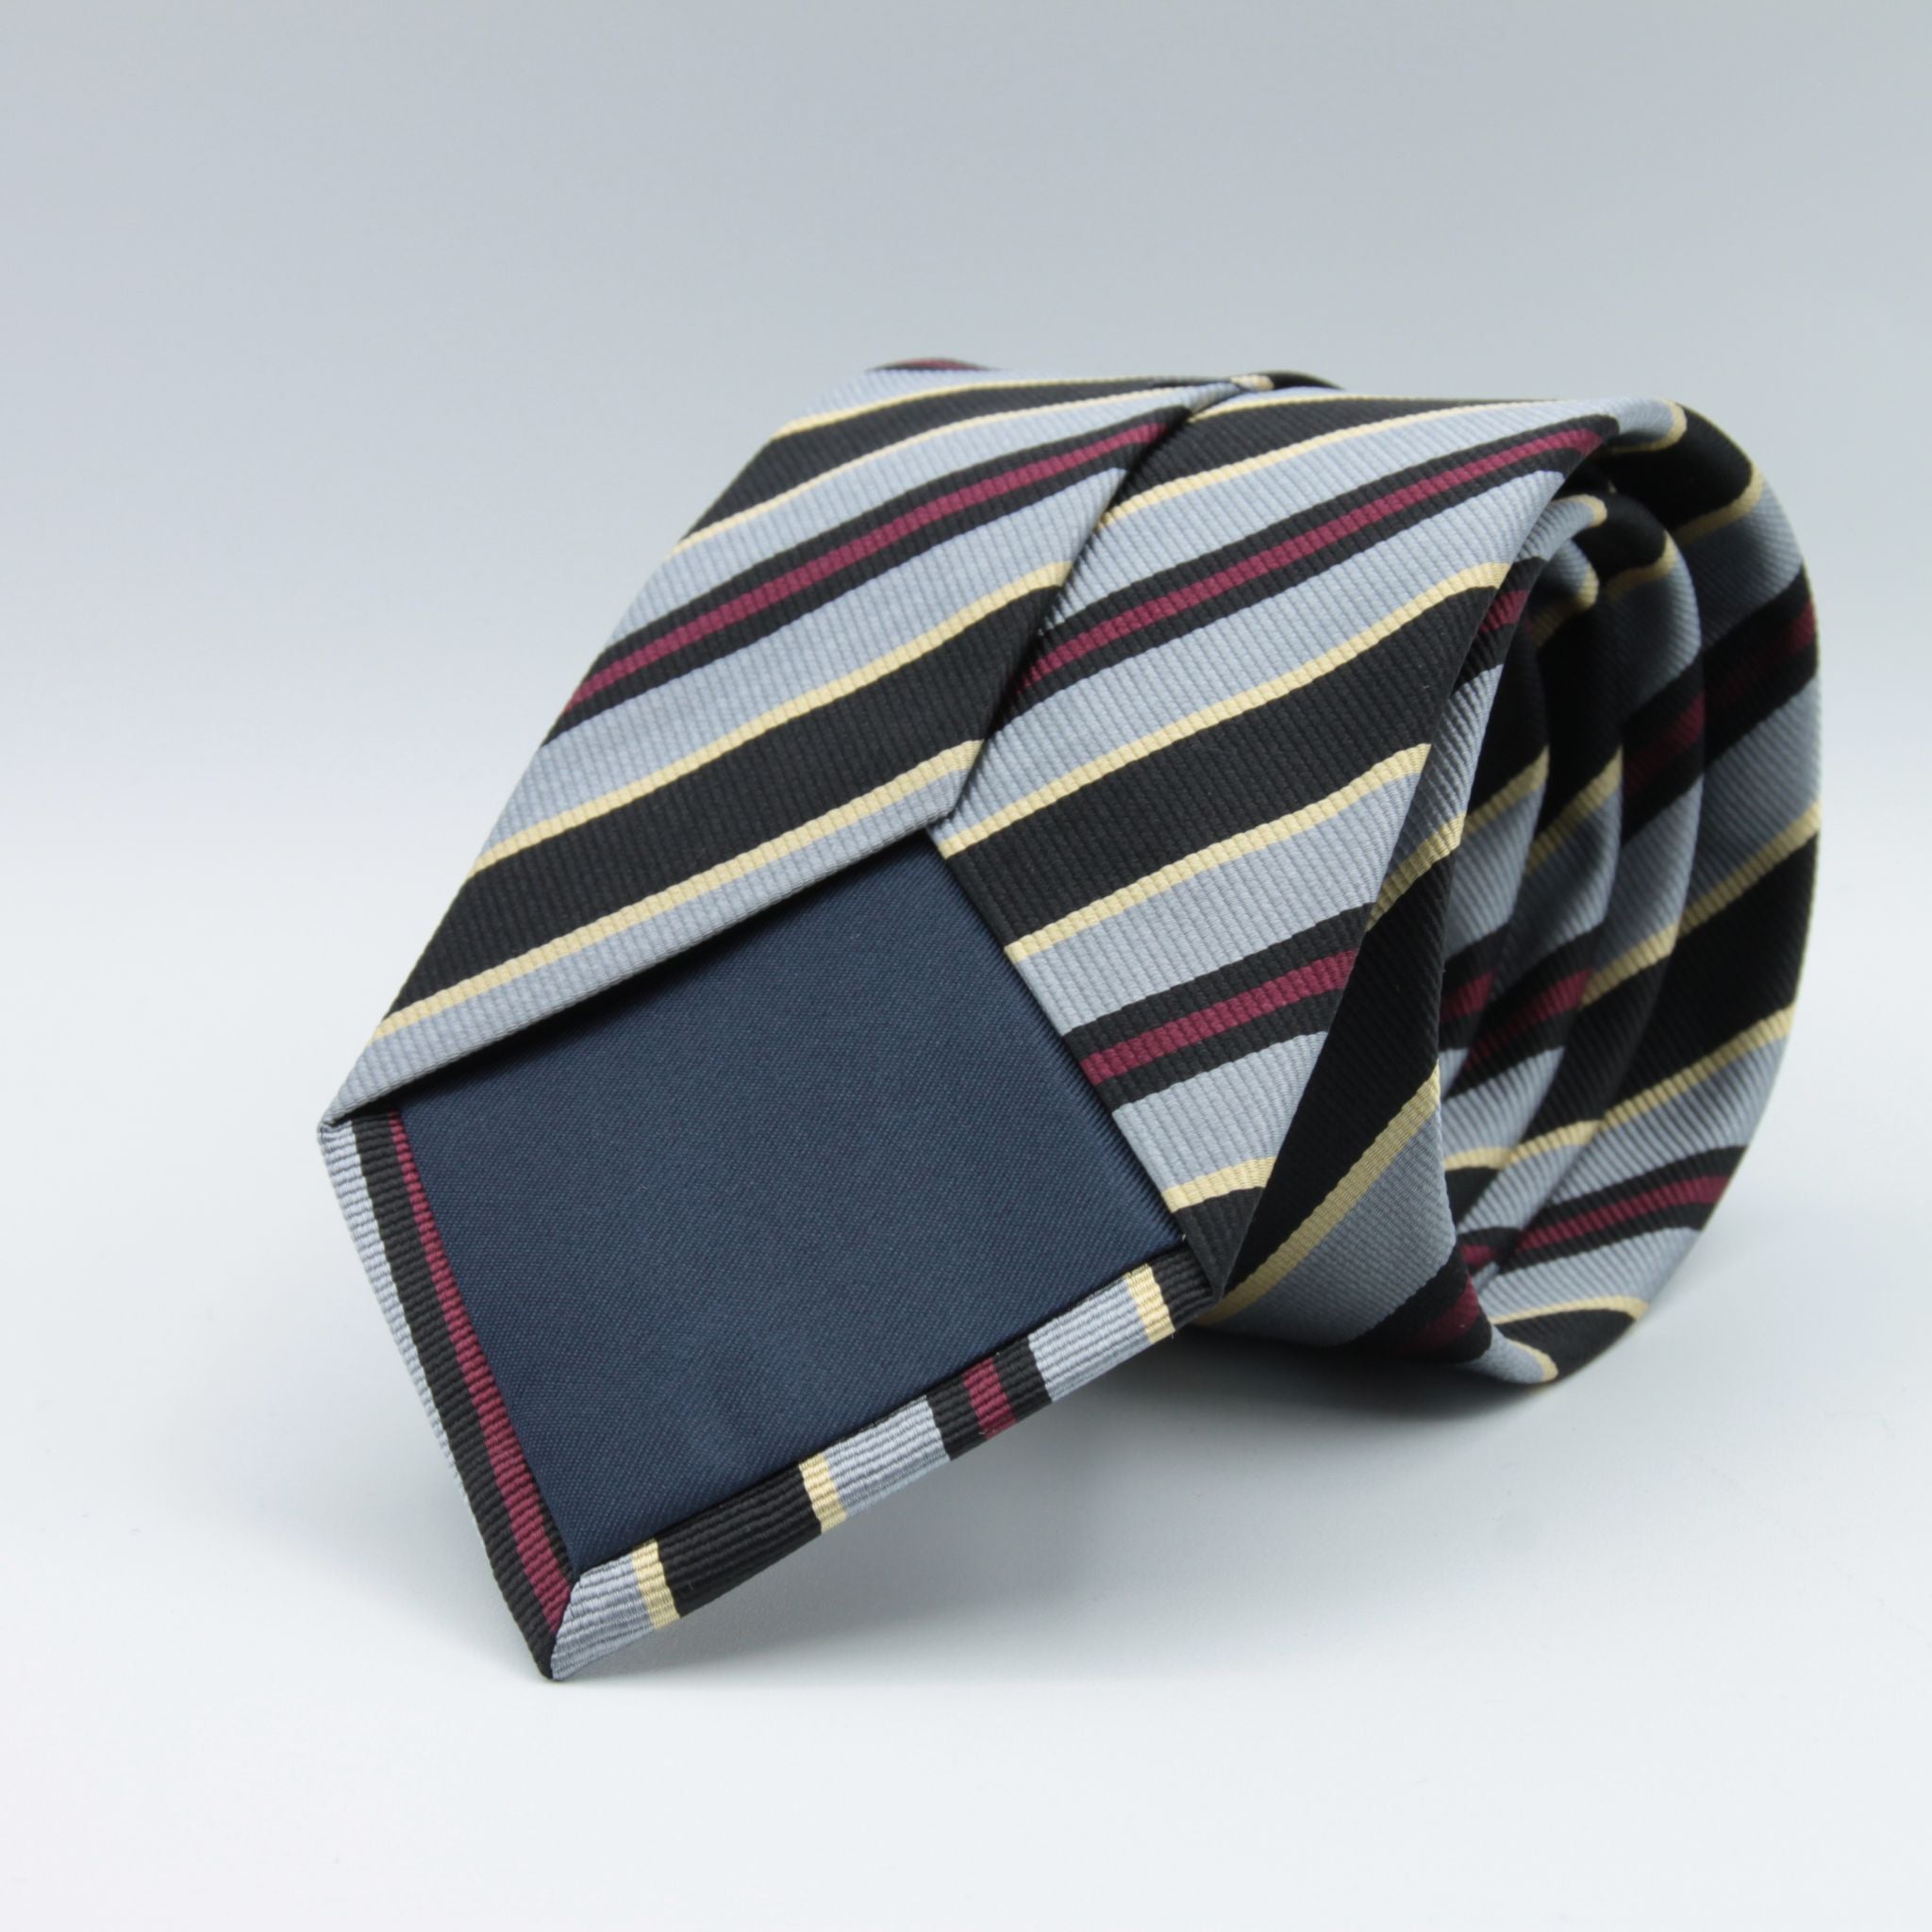 Cruciani & Bella 100% Silk Jacquard  Tipped Regimental "London Scottish" Light Grey, Black, Yellow and Red stripes tie Handmade in Italy 8 cm x 148 cm #2523